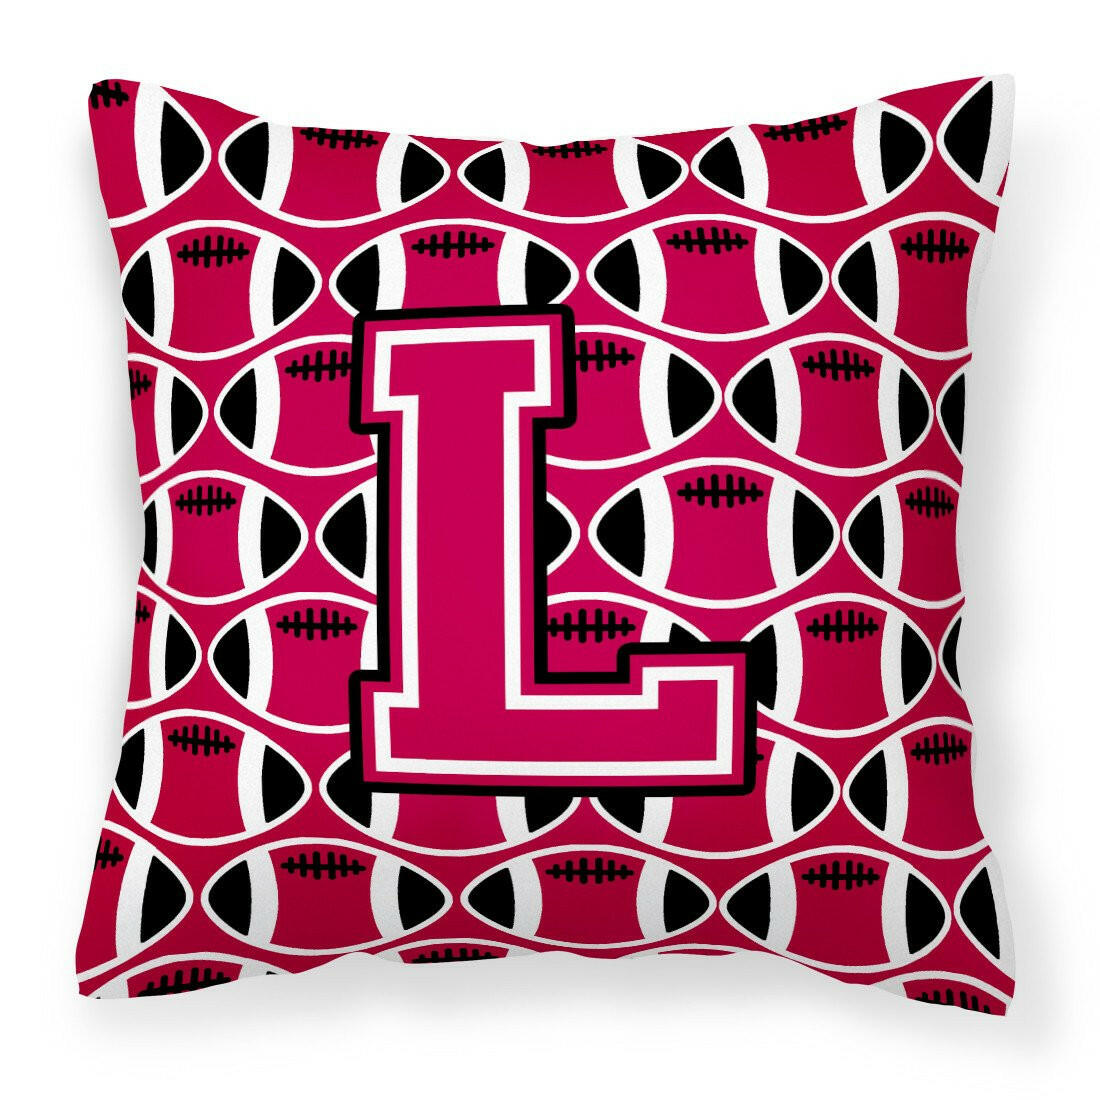 Letter L Football Crimson and White Fabric Decorative Pillow CJ1079-LPW1414 by Caroline's Treasures